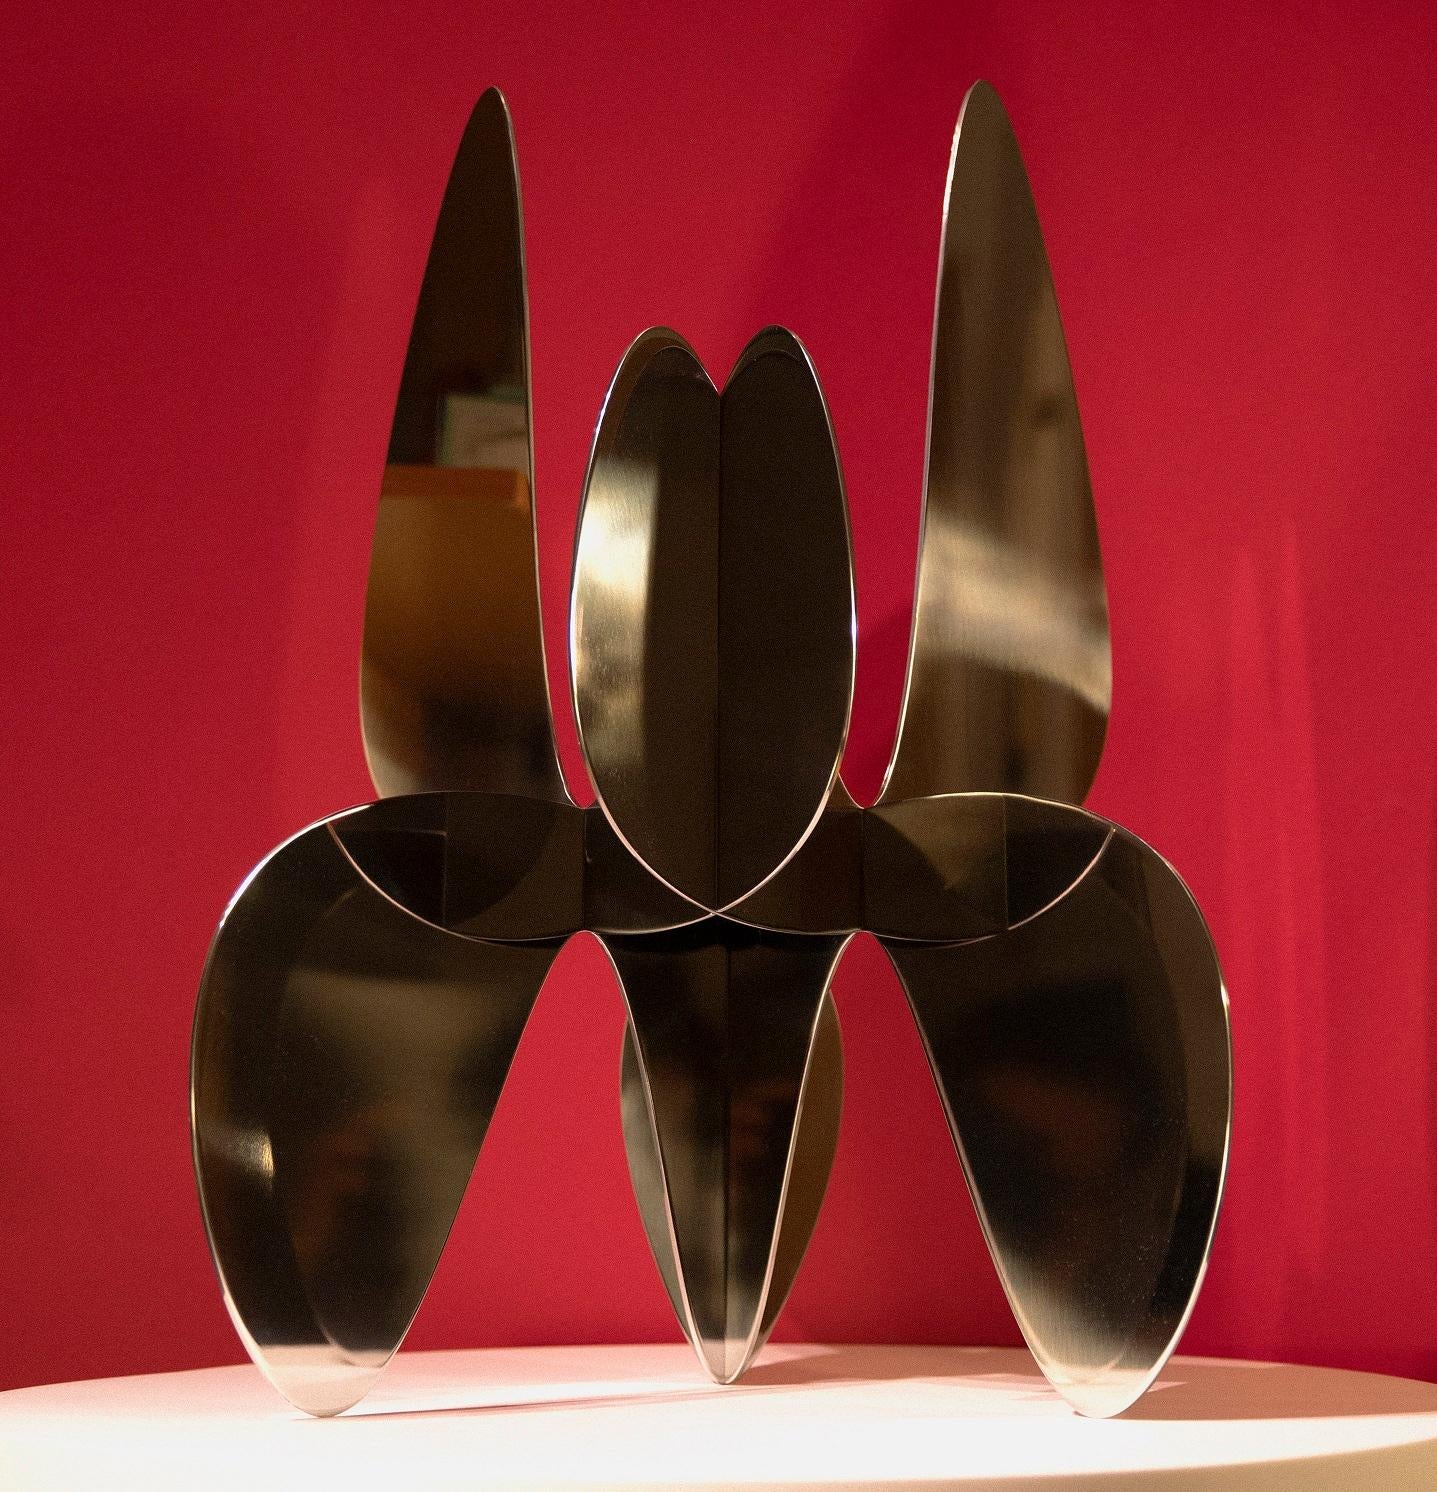 Barricada n°9 aip M2 de A. Vega Beuvrin - sculpture abstraite en acier inoxydable - Sculpture de Alejandro Vega Beuvrin